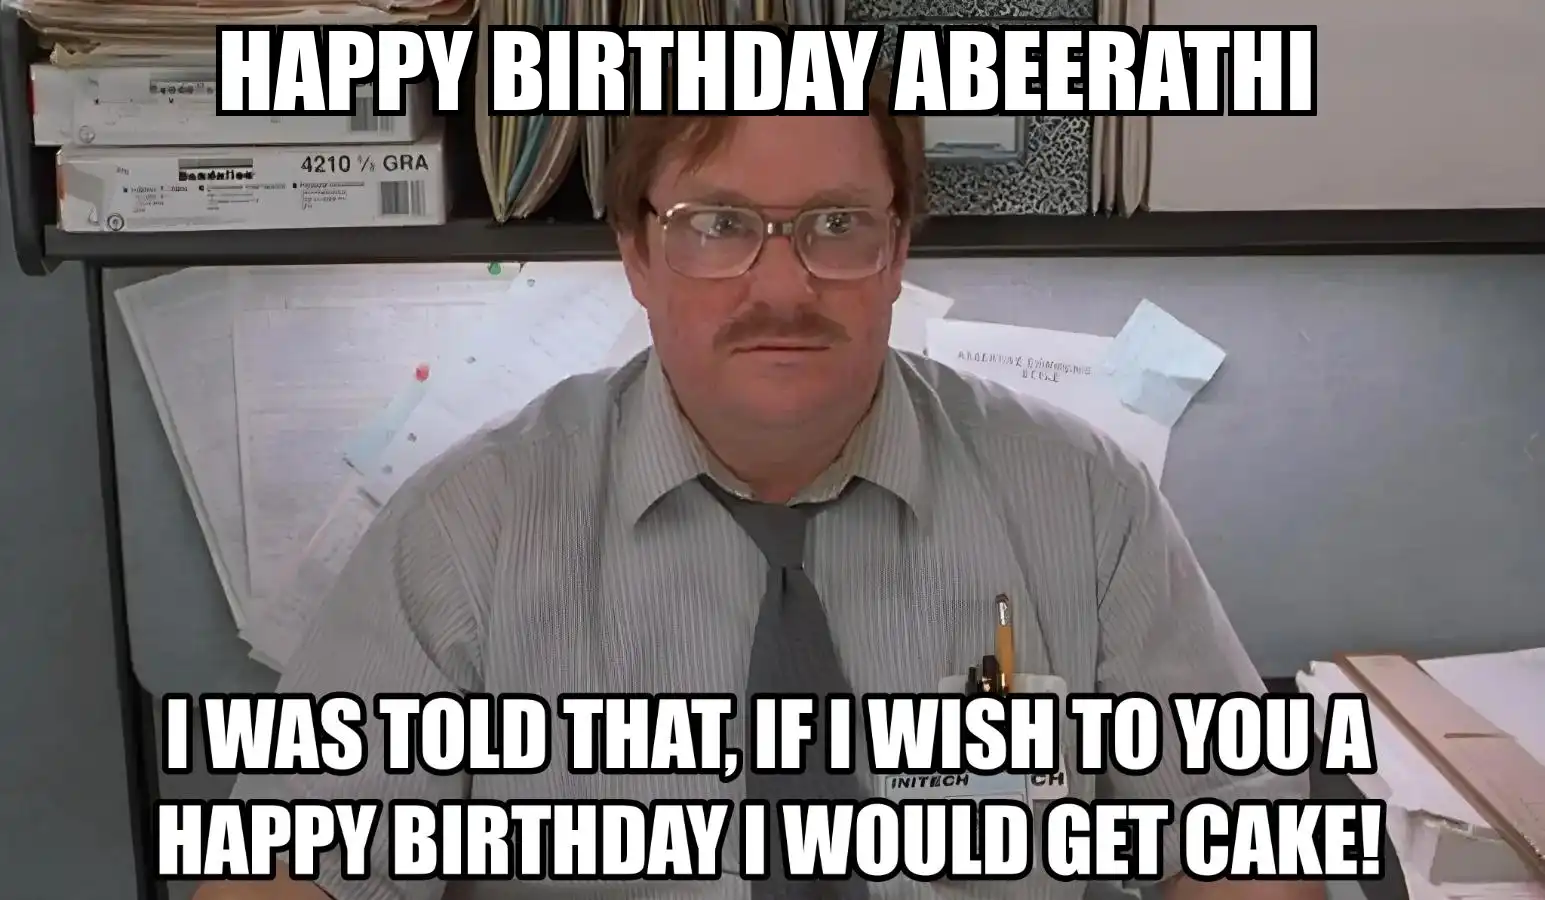 Happy Birthday Abeerathi I Would Get A Cake Meme